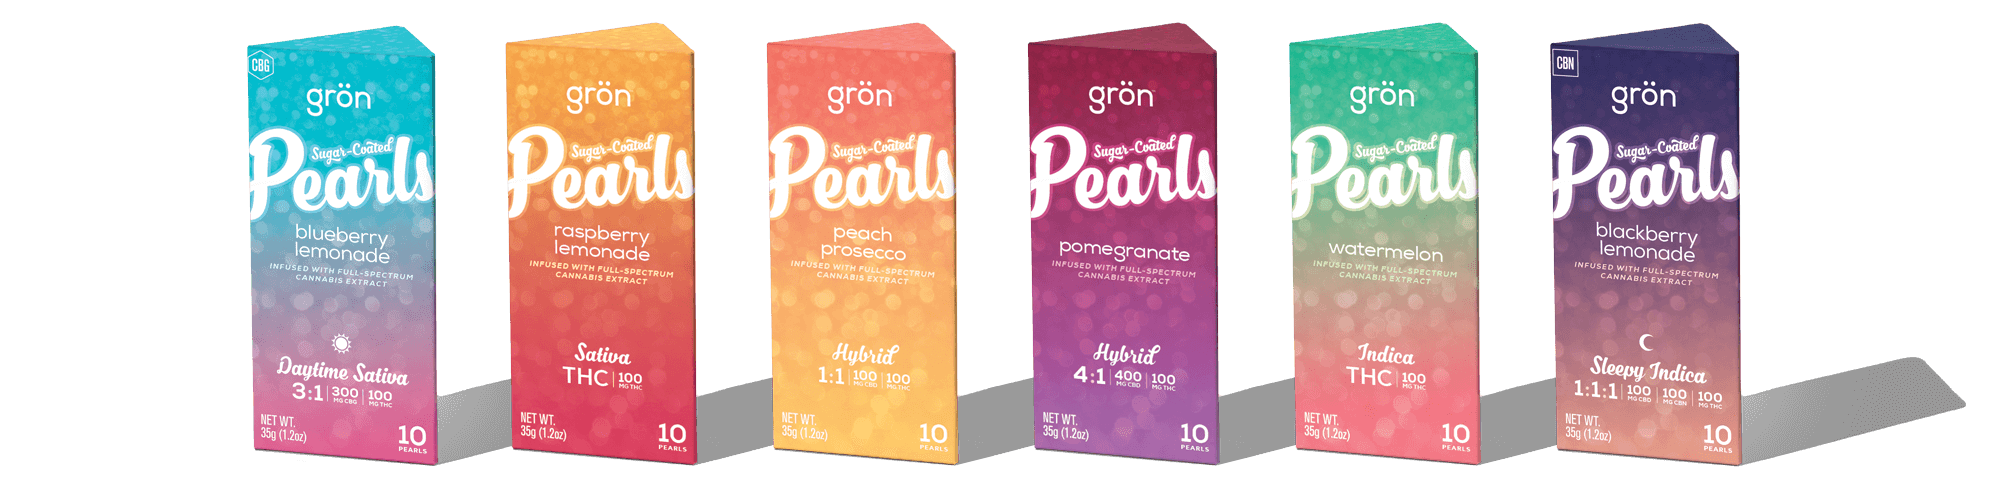 Grön Sugar-Coated Pearls